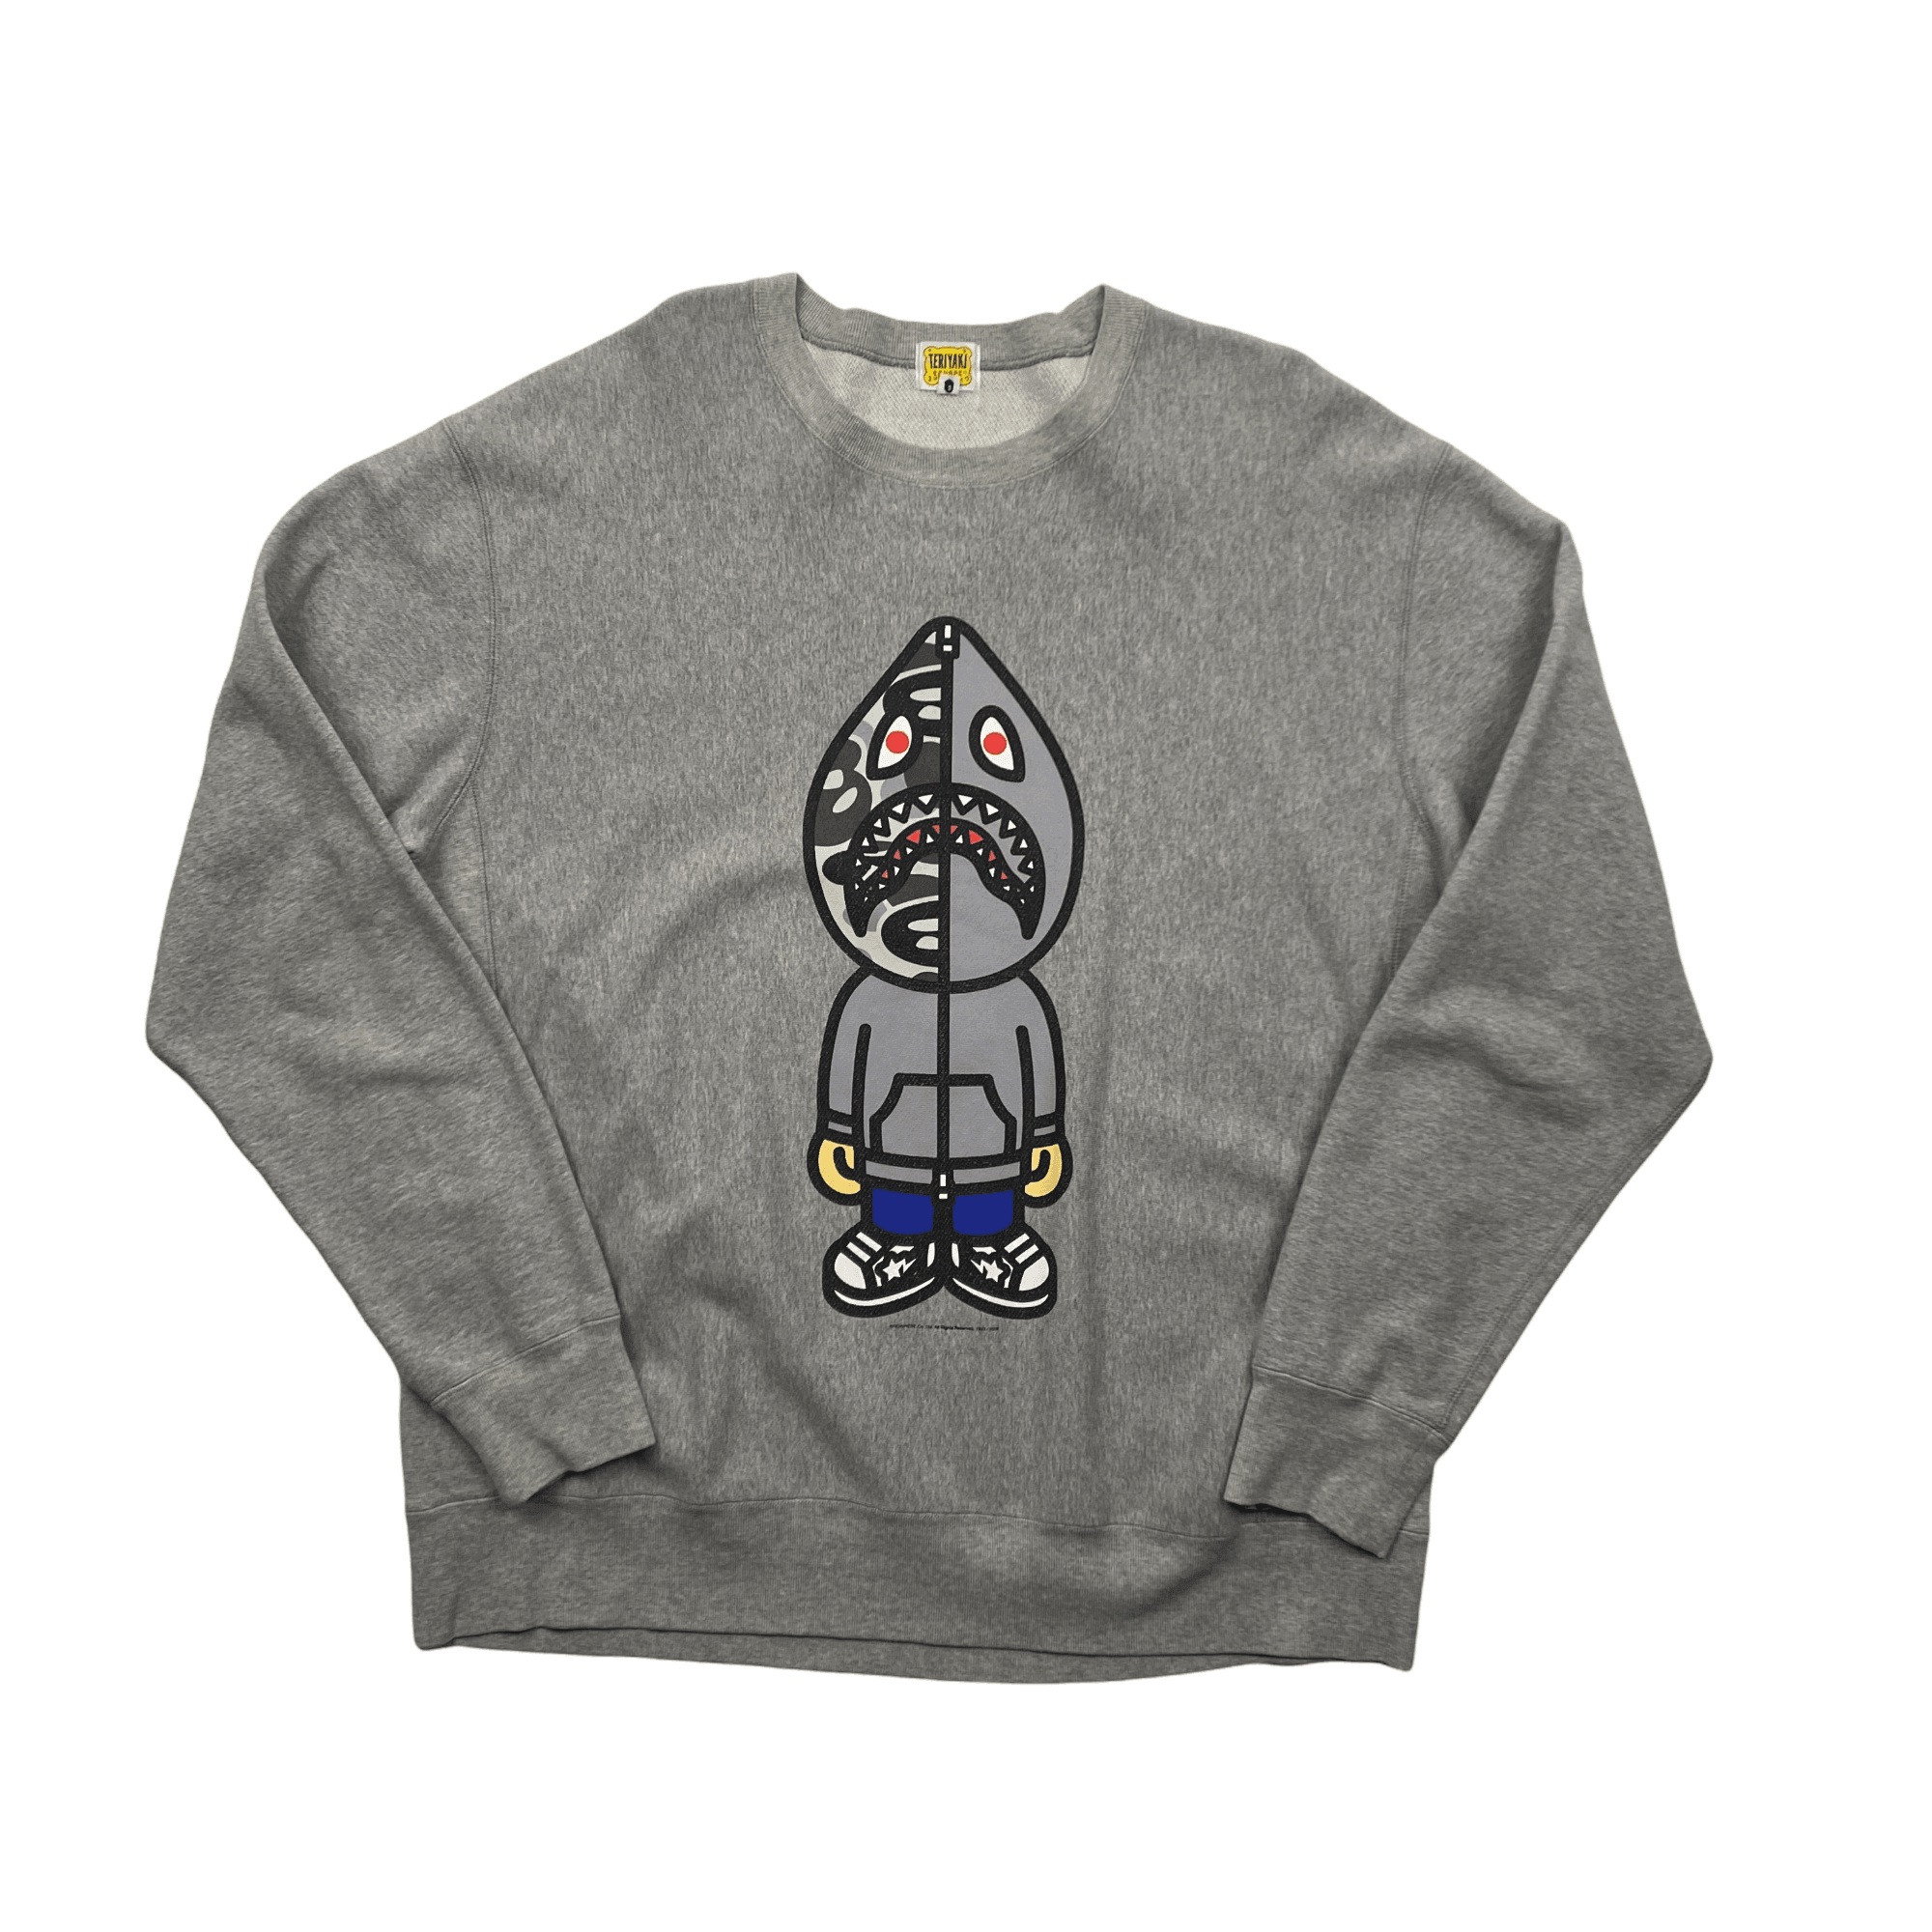 Grey Teriyaki Source x A Bathing Ape (BAPE) Sweatshirt - Large - The Streetwear Studio